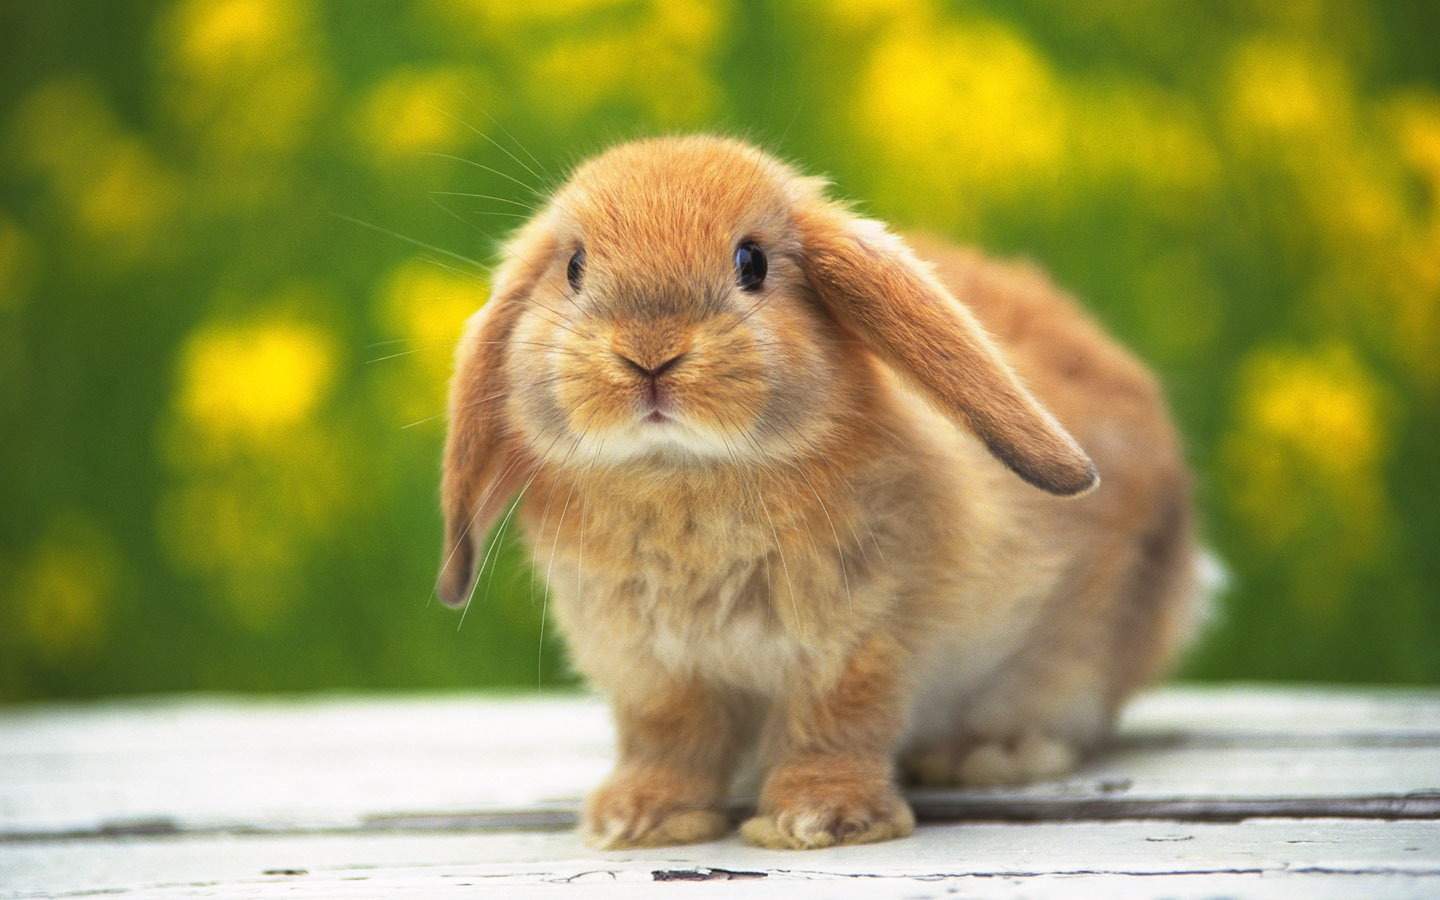 Cute little bunny wallpaper #20 - 1440x900